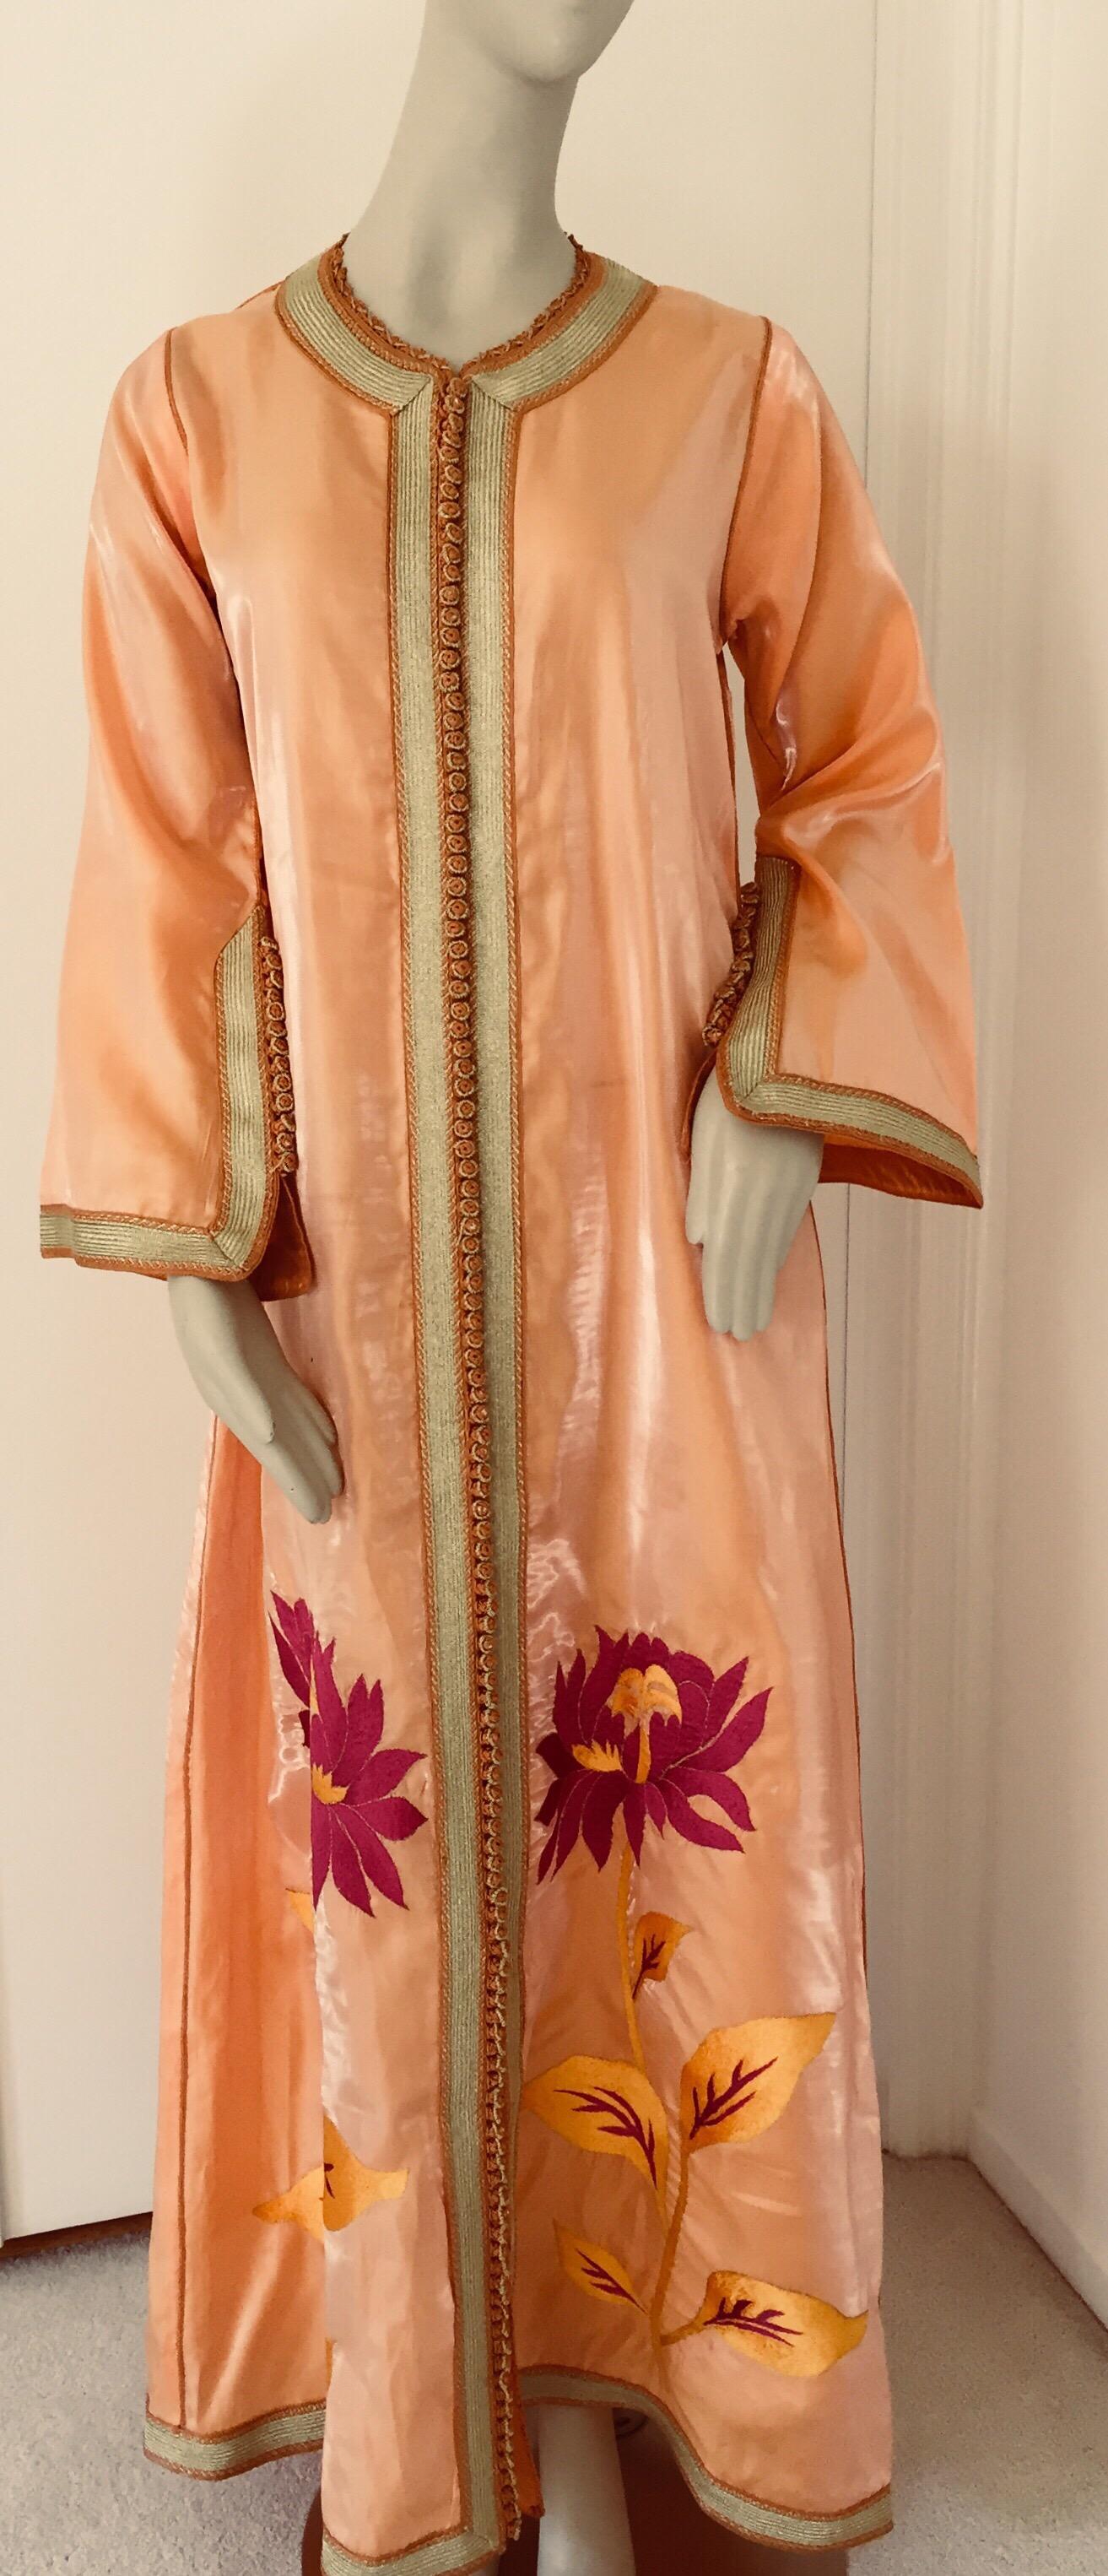 Bohemian Moroccan Vintage Caftan 1970s Kaftan Maxi Dress Orange with Floral Embroideries